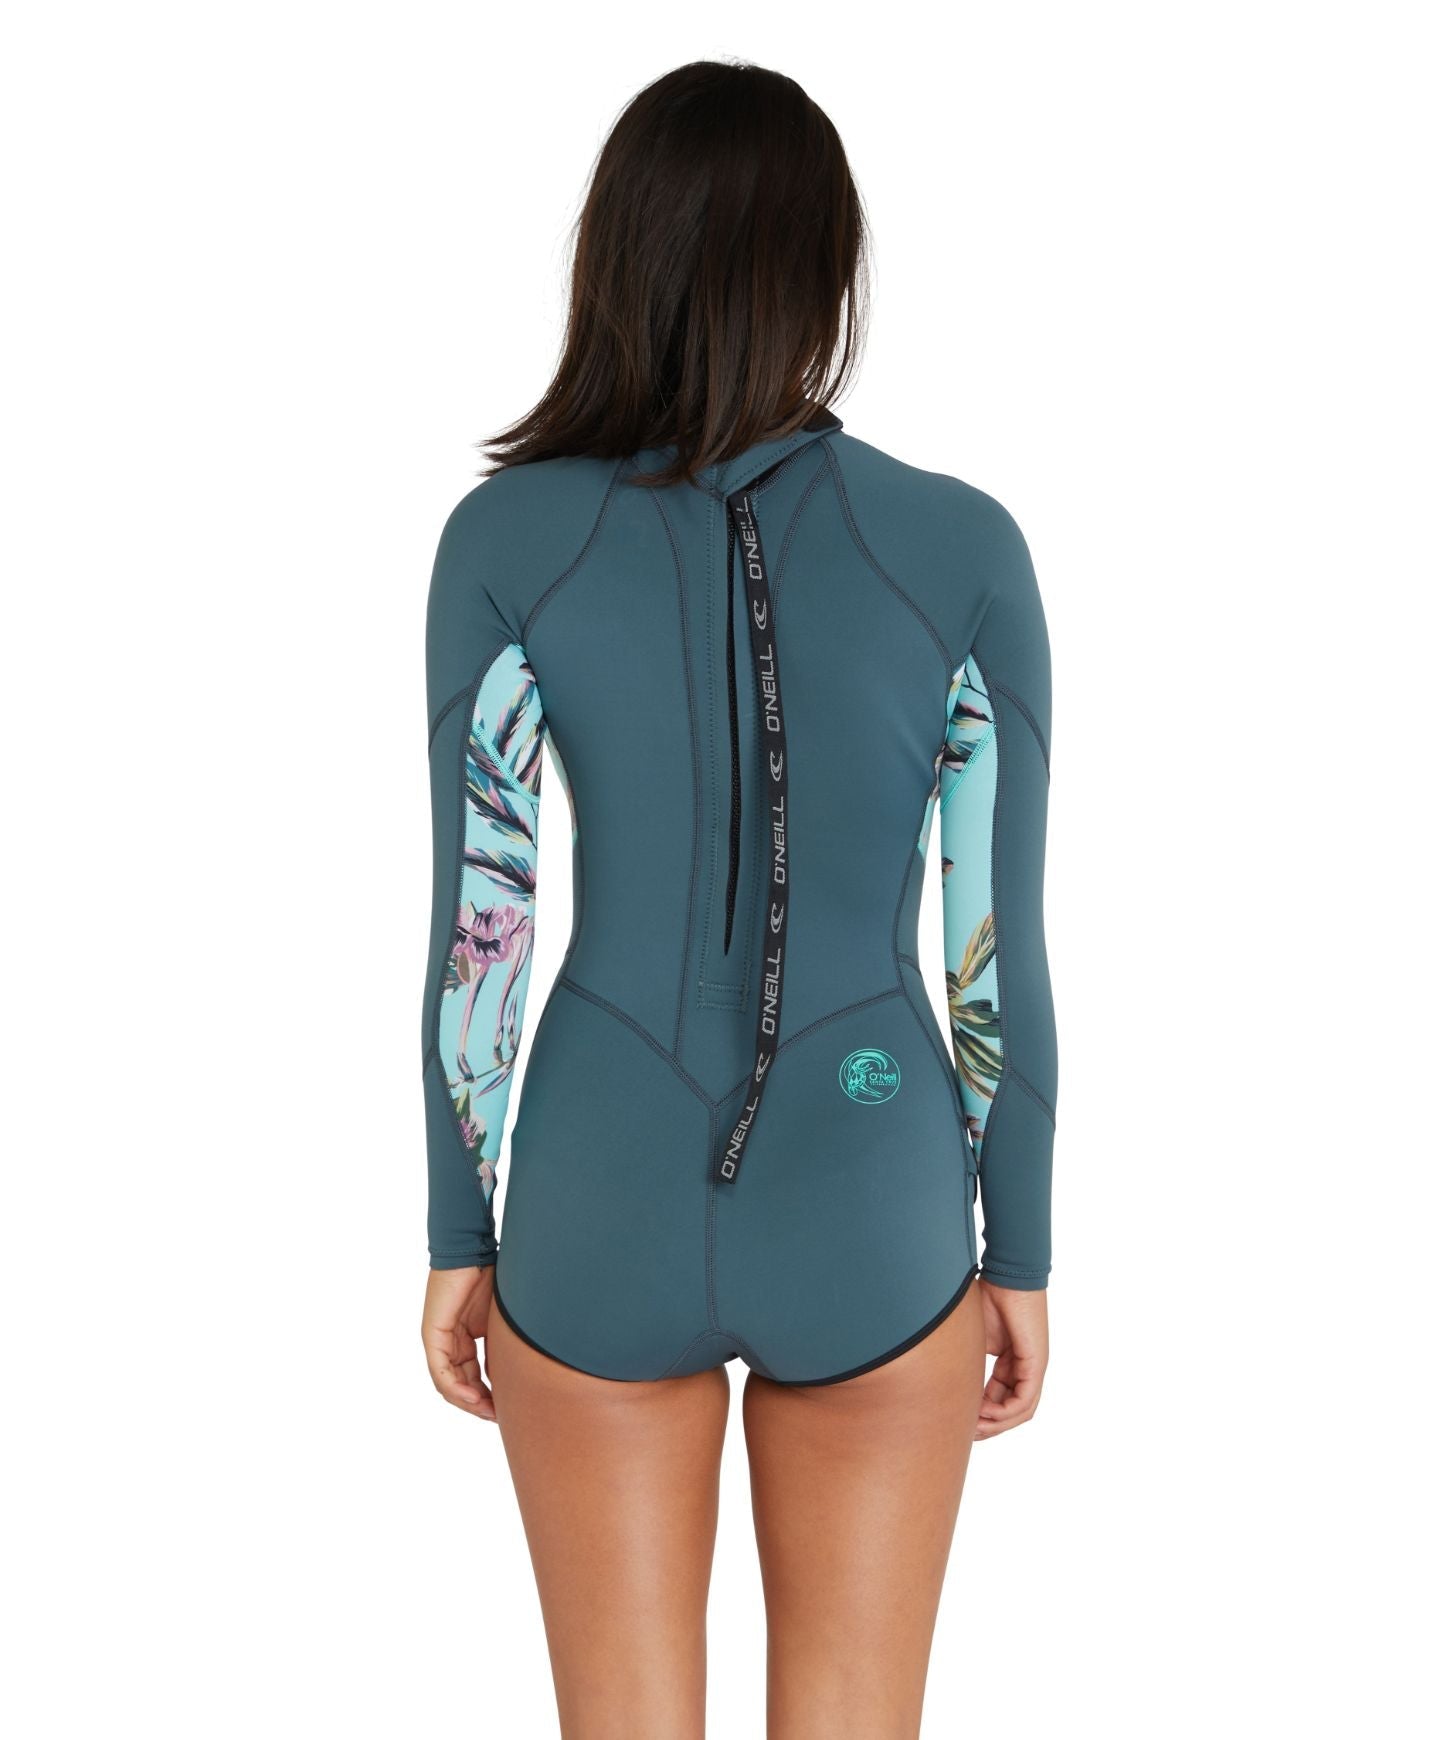 Women's Bahia 2mm Long Sleeve Mid Spring Suit Wetsuit - Aloha